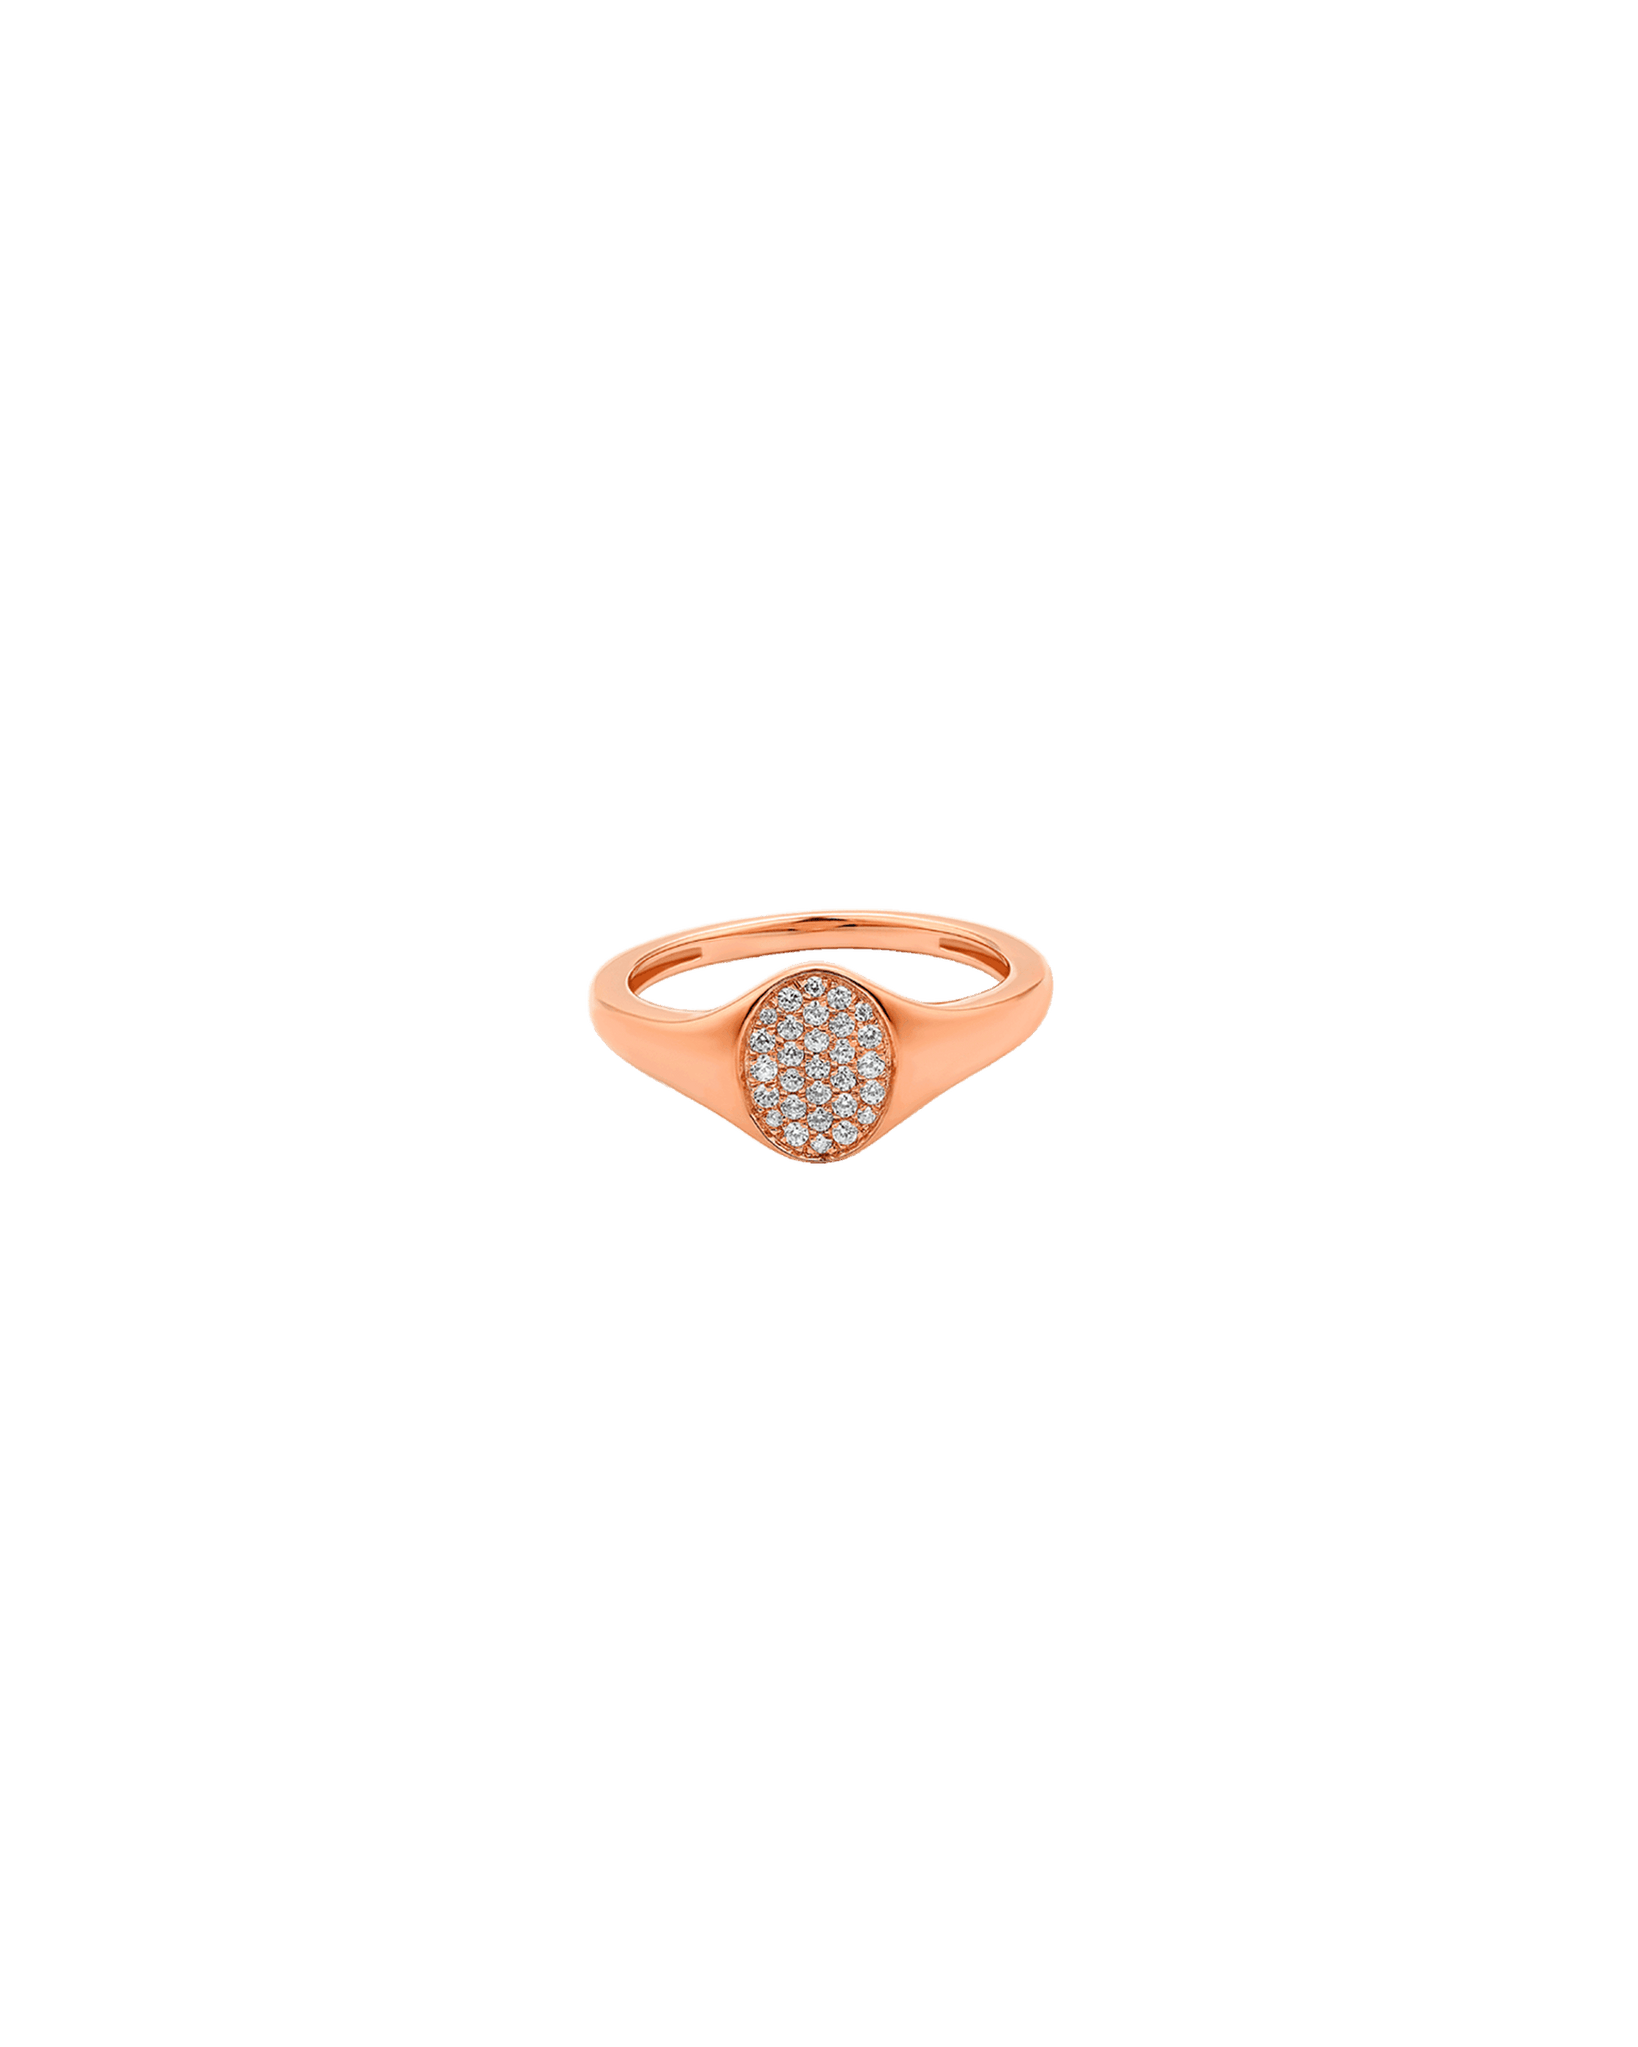 Oval Signet Diamond Ring - 14K Rose Gold Rings 14K Solid Gold US 4 